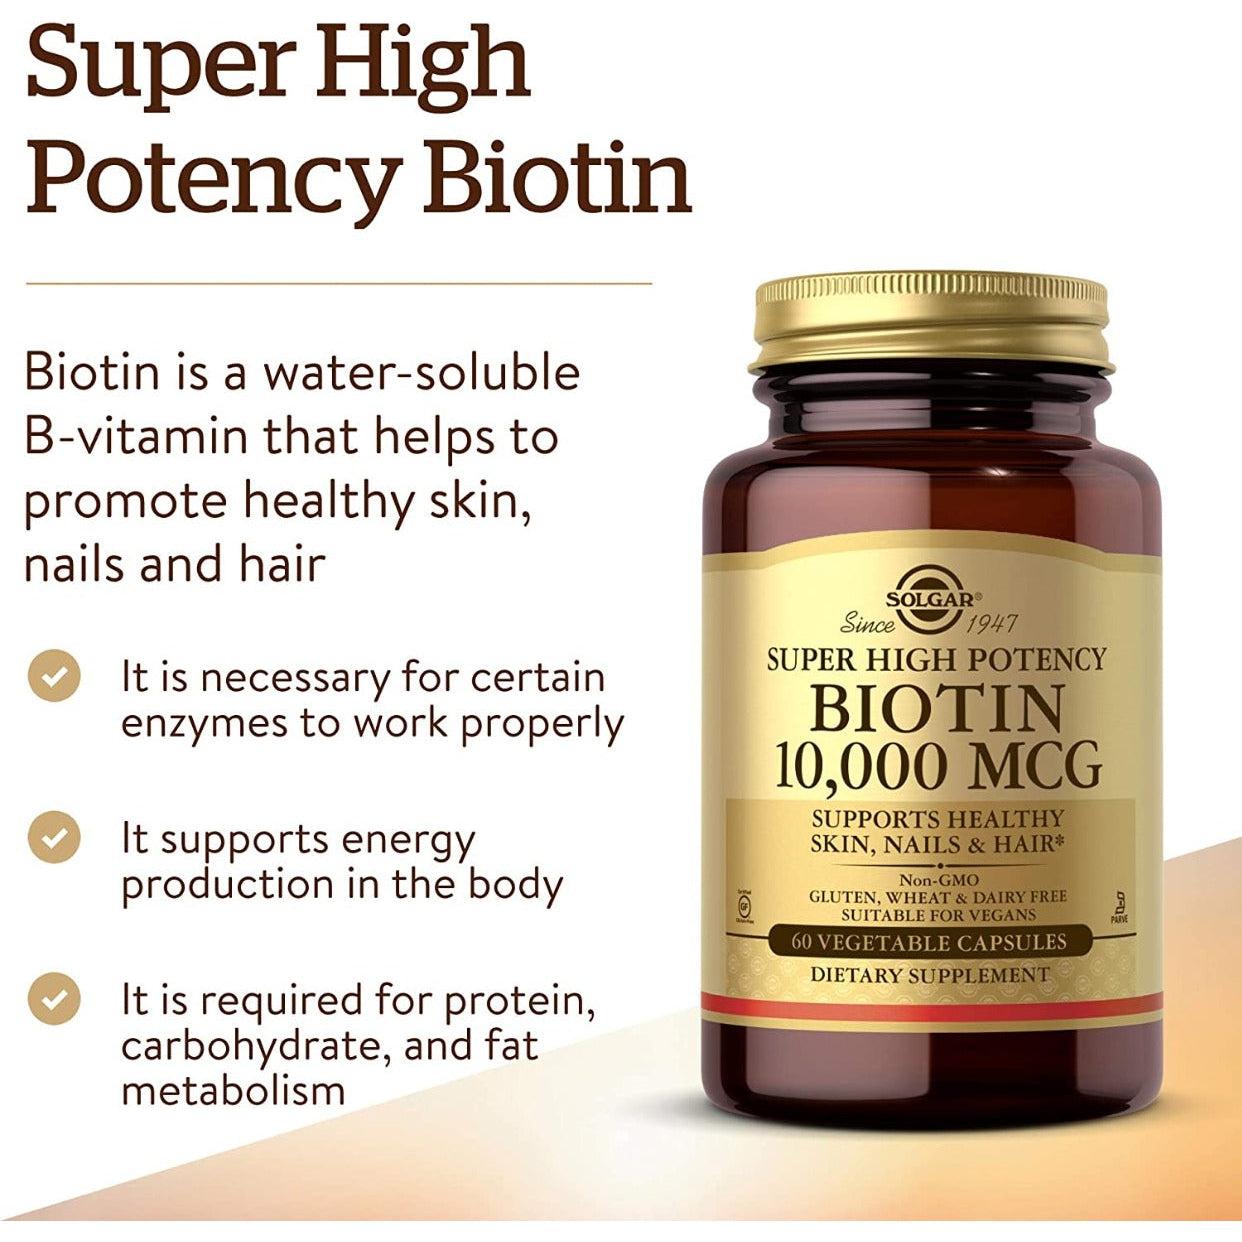 Solgar Super High Potency Biotin 10,000 MCG 60 Vegetable Capsules